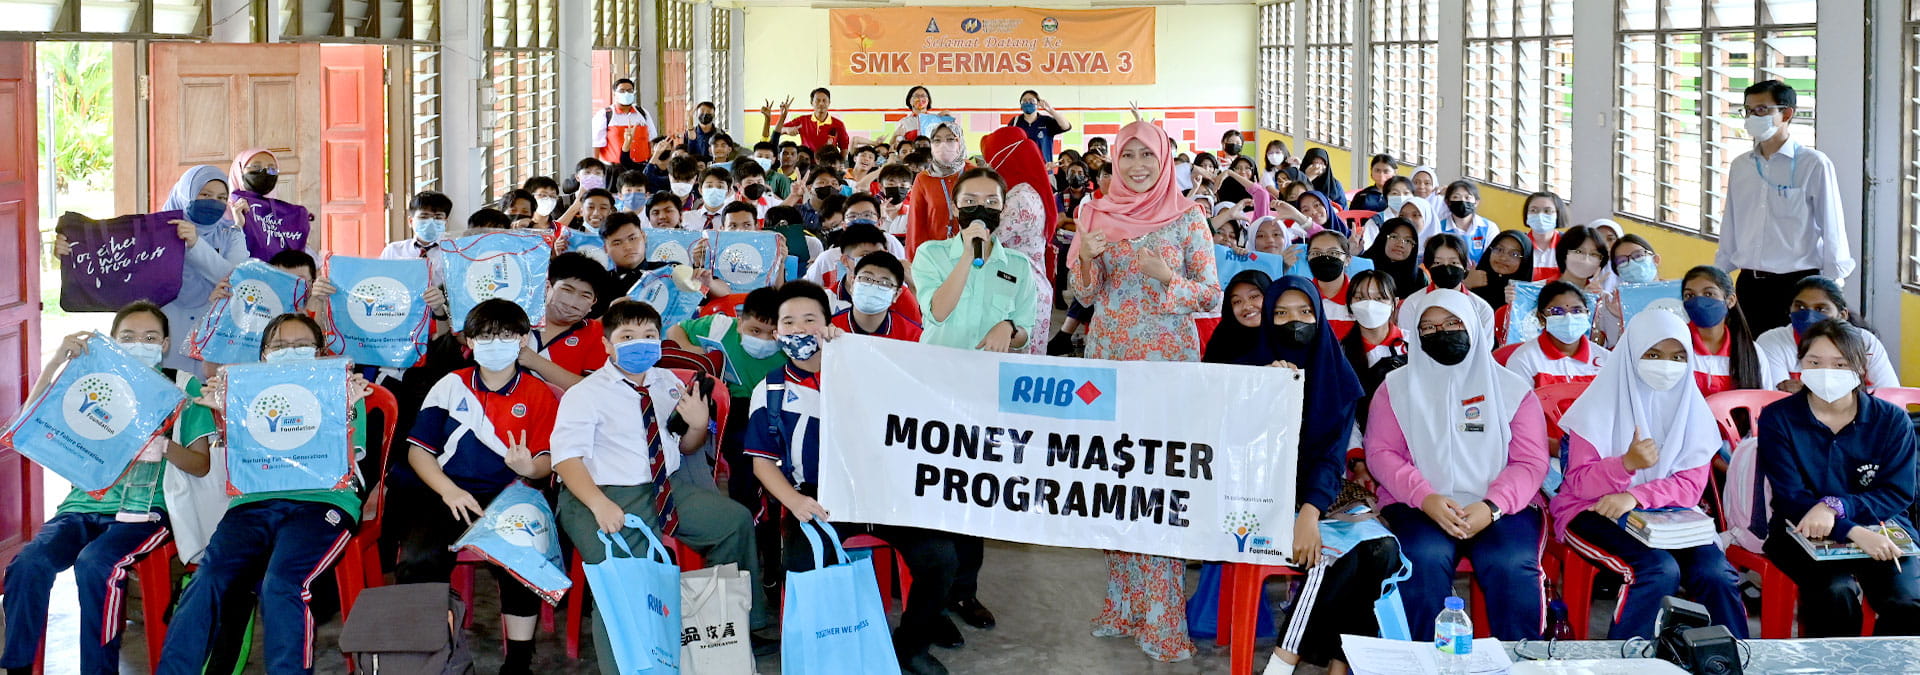 SMK Permas Jaya 3 banner